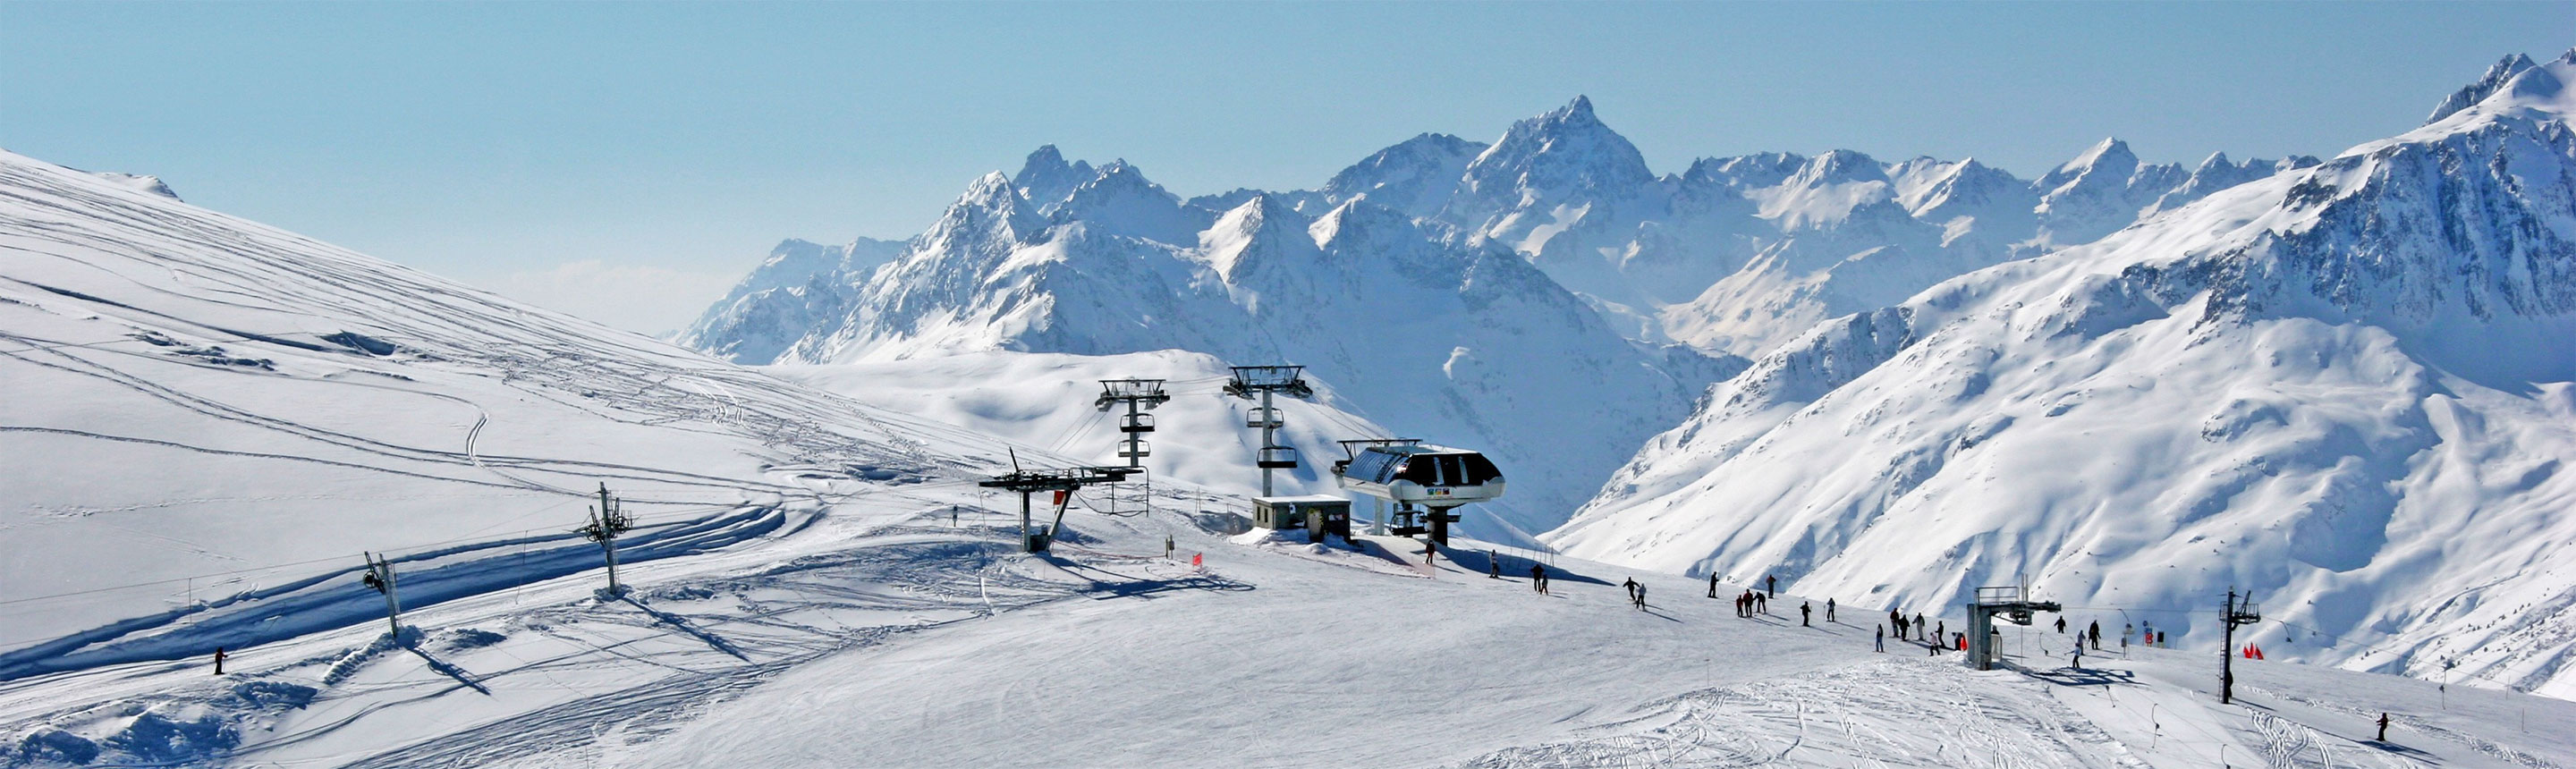 ośrodek narciarski w Le Corbier